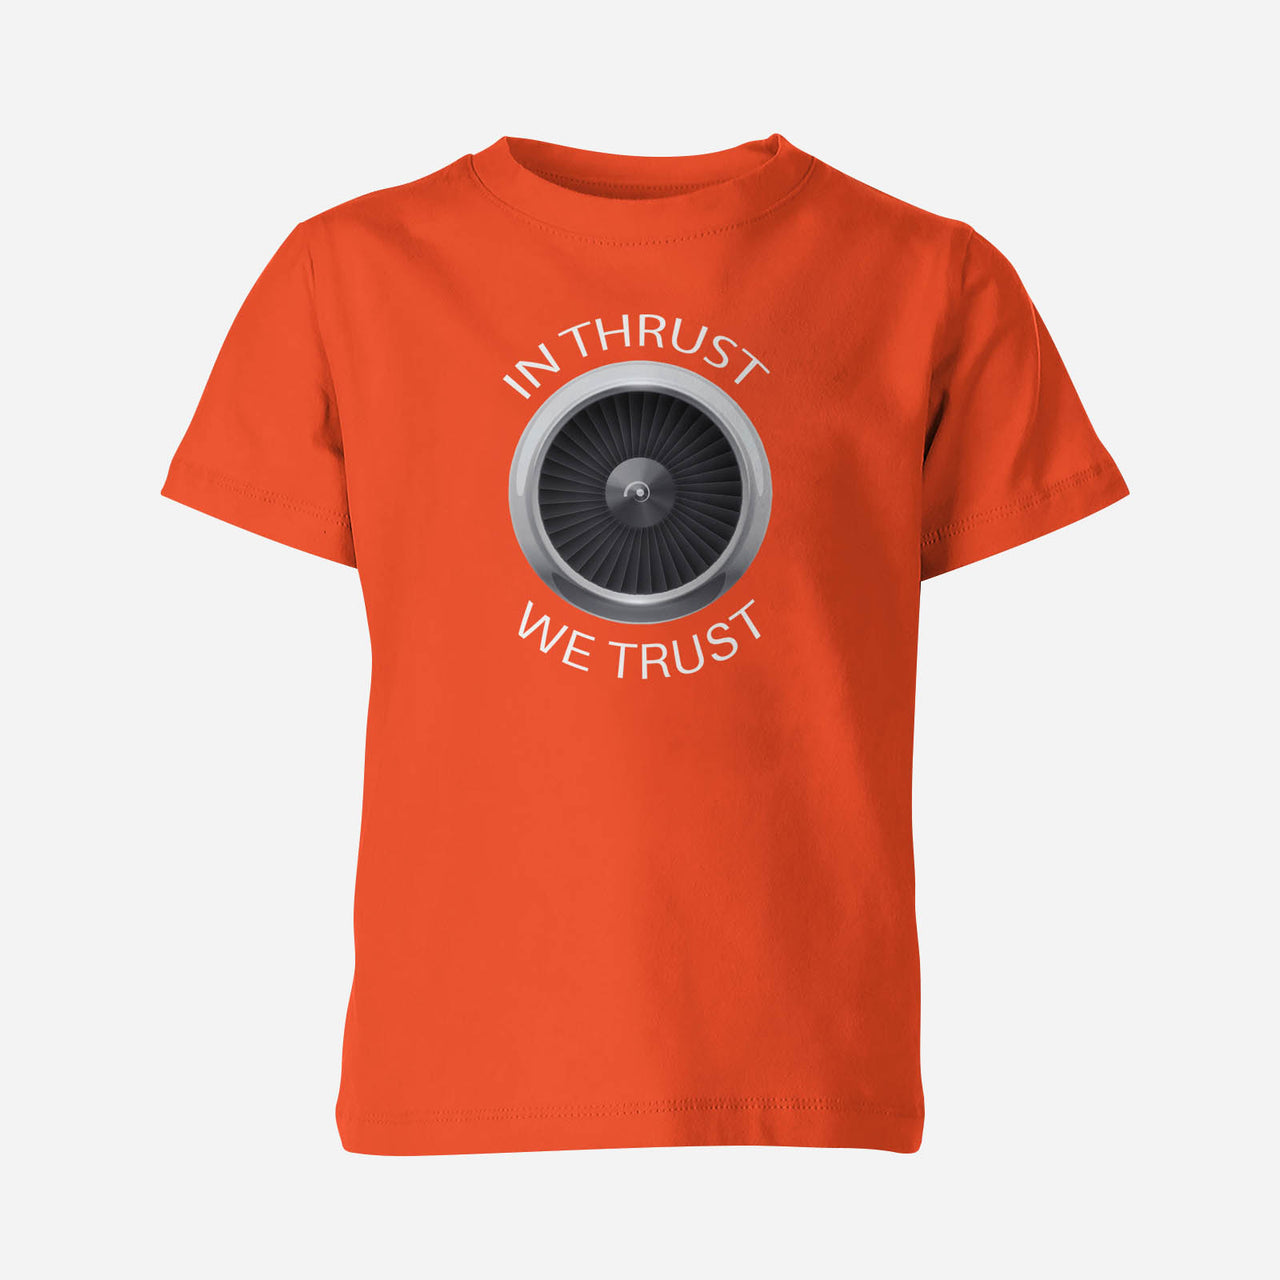 In Thrust We Trust Designed Children T-Shirts